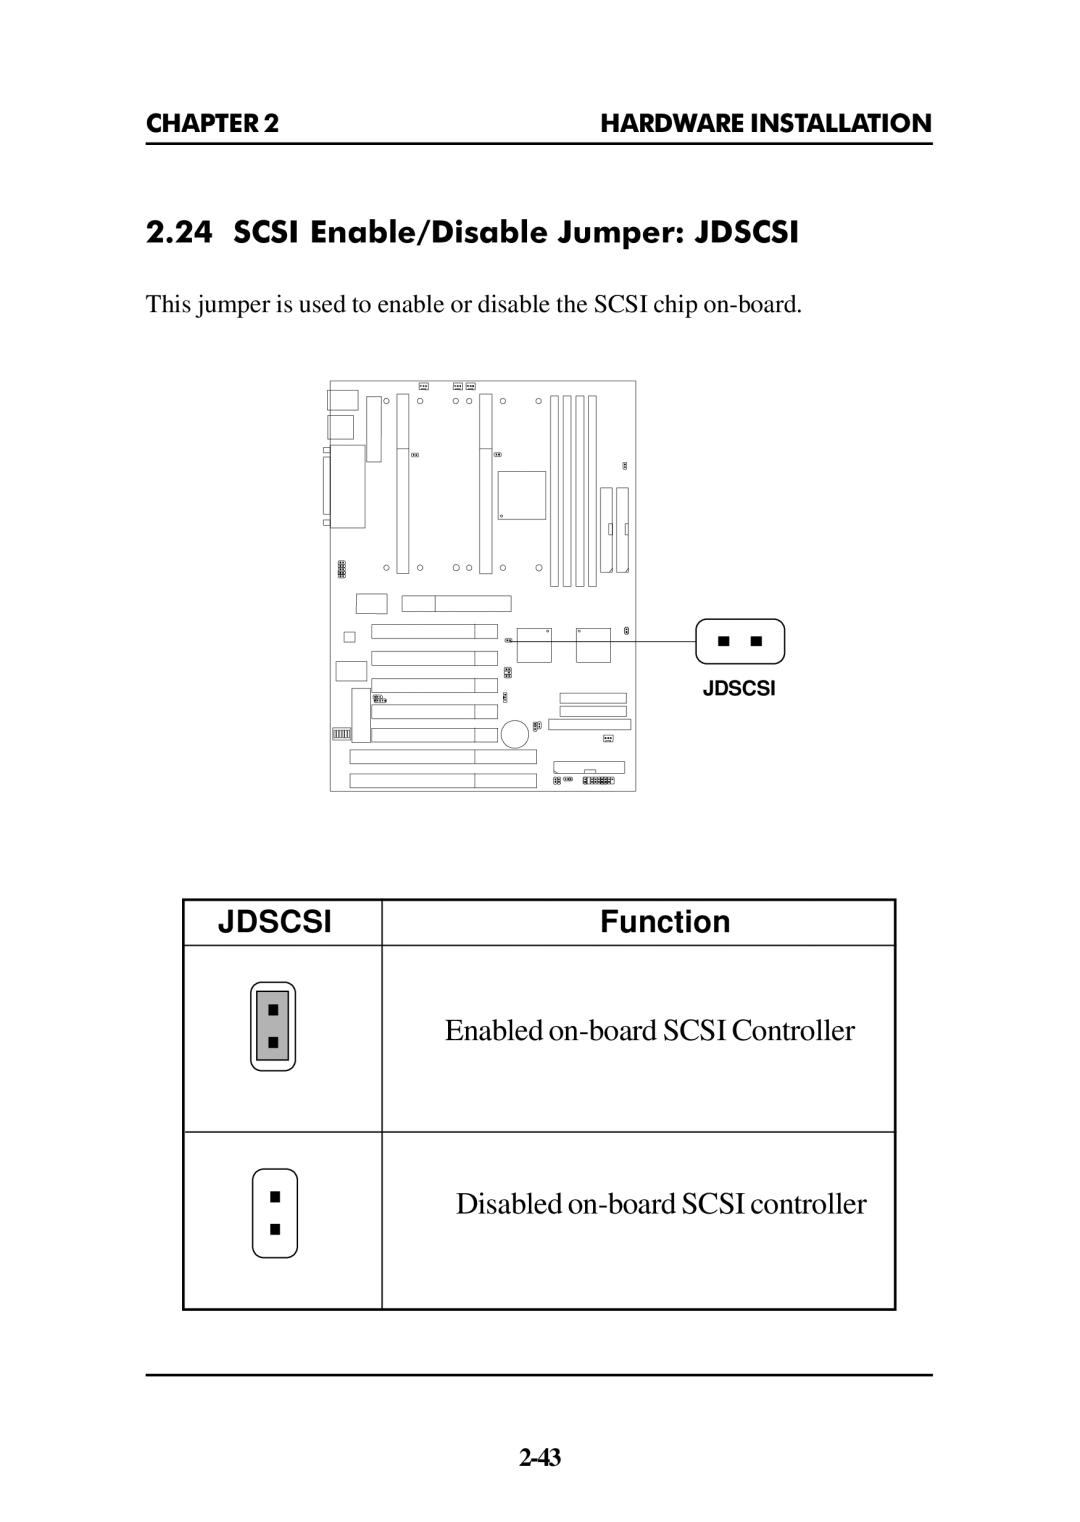 Intel ATX BX2 manual Scsi Enable/Disable Jumper Jdscsi 